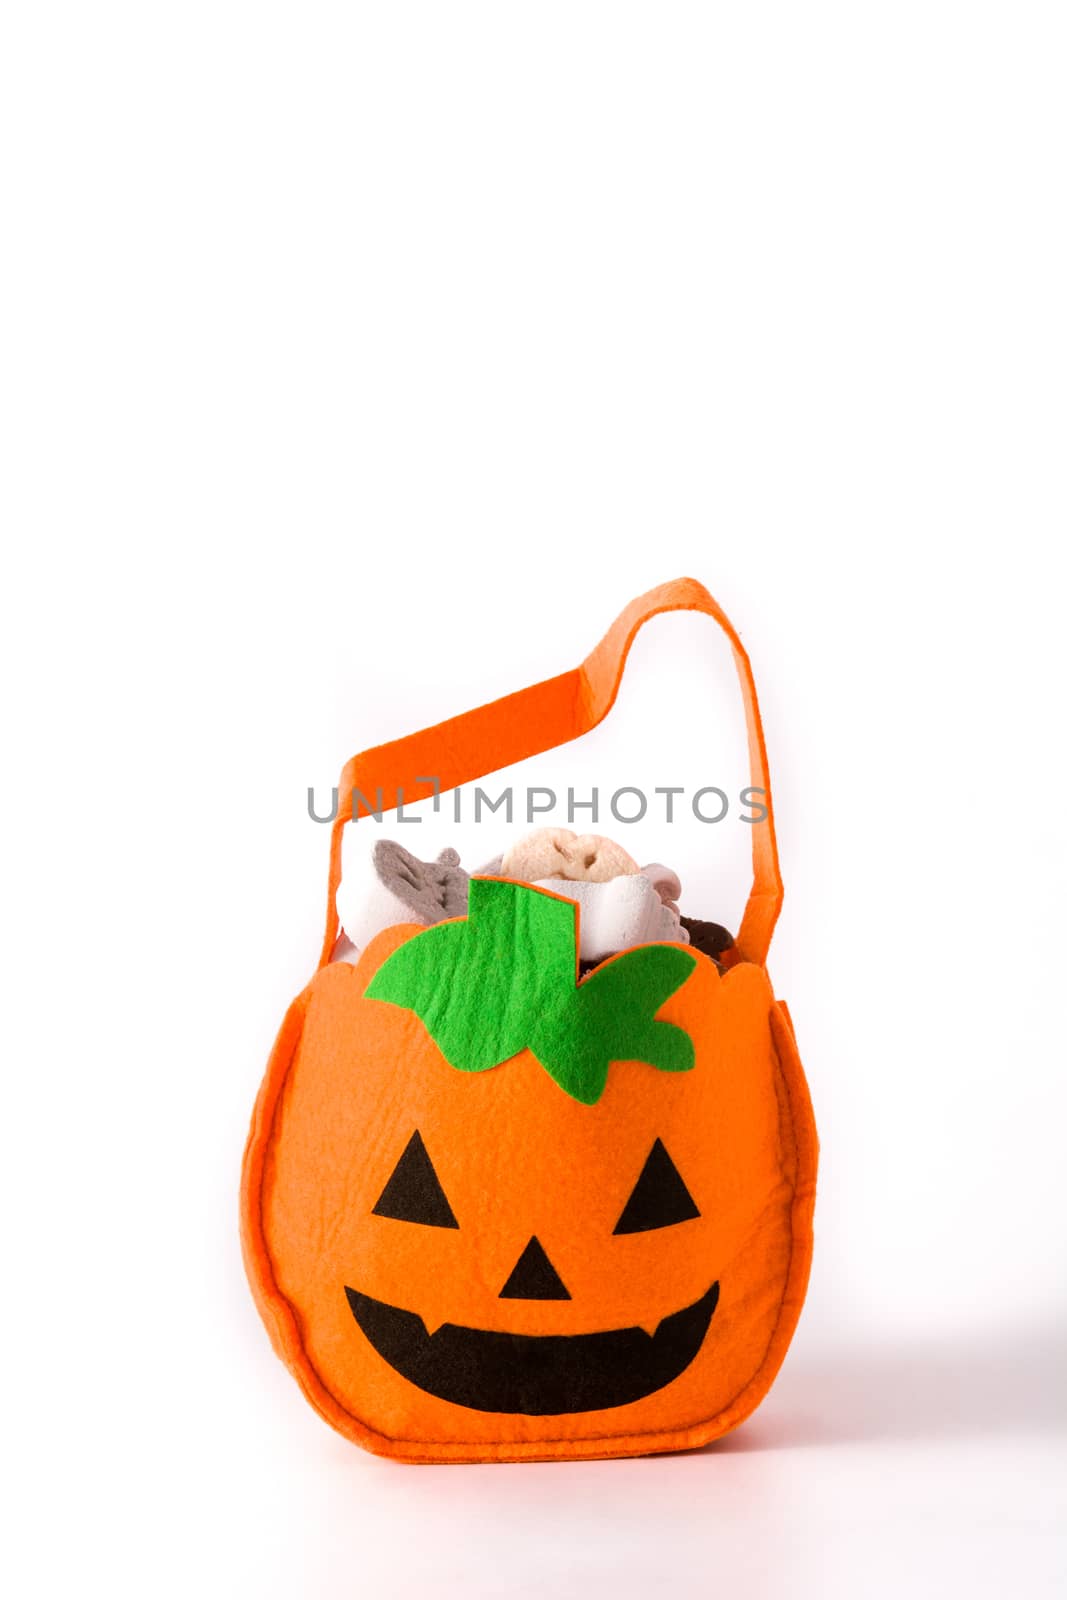 Halloween pumpkin bag with candies inside by chandlervid85